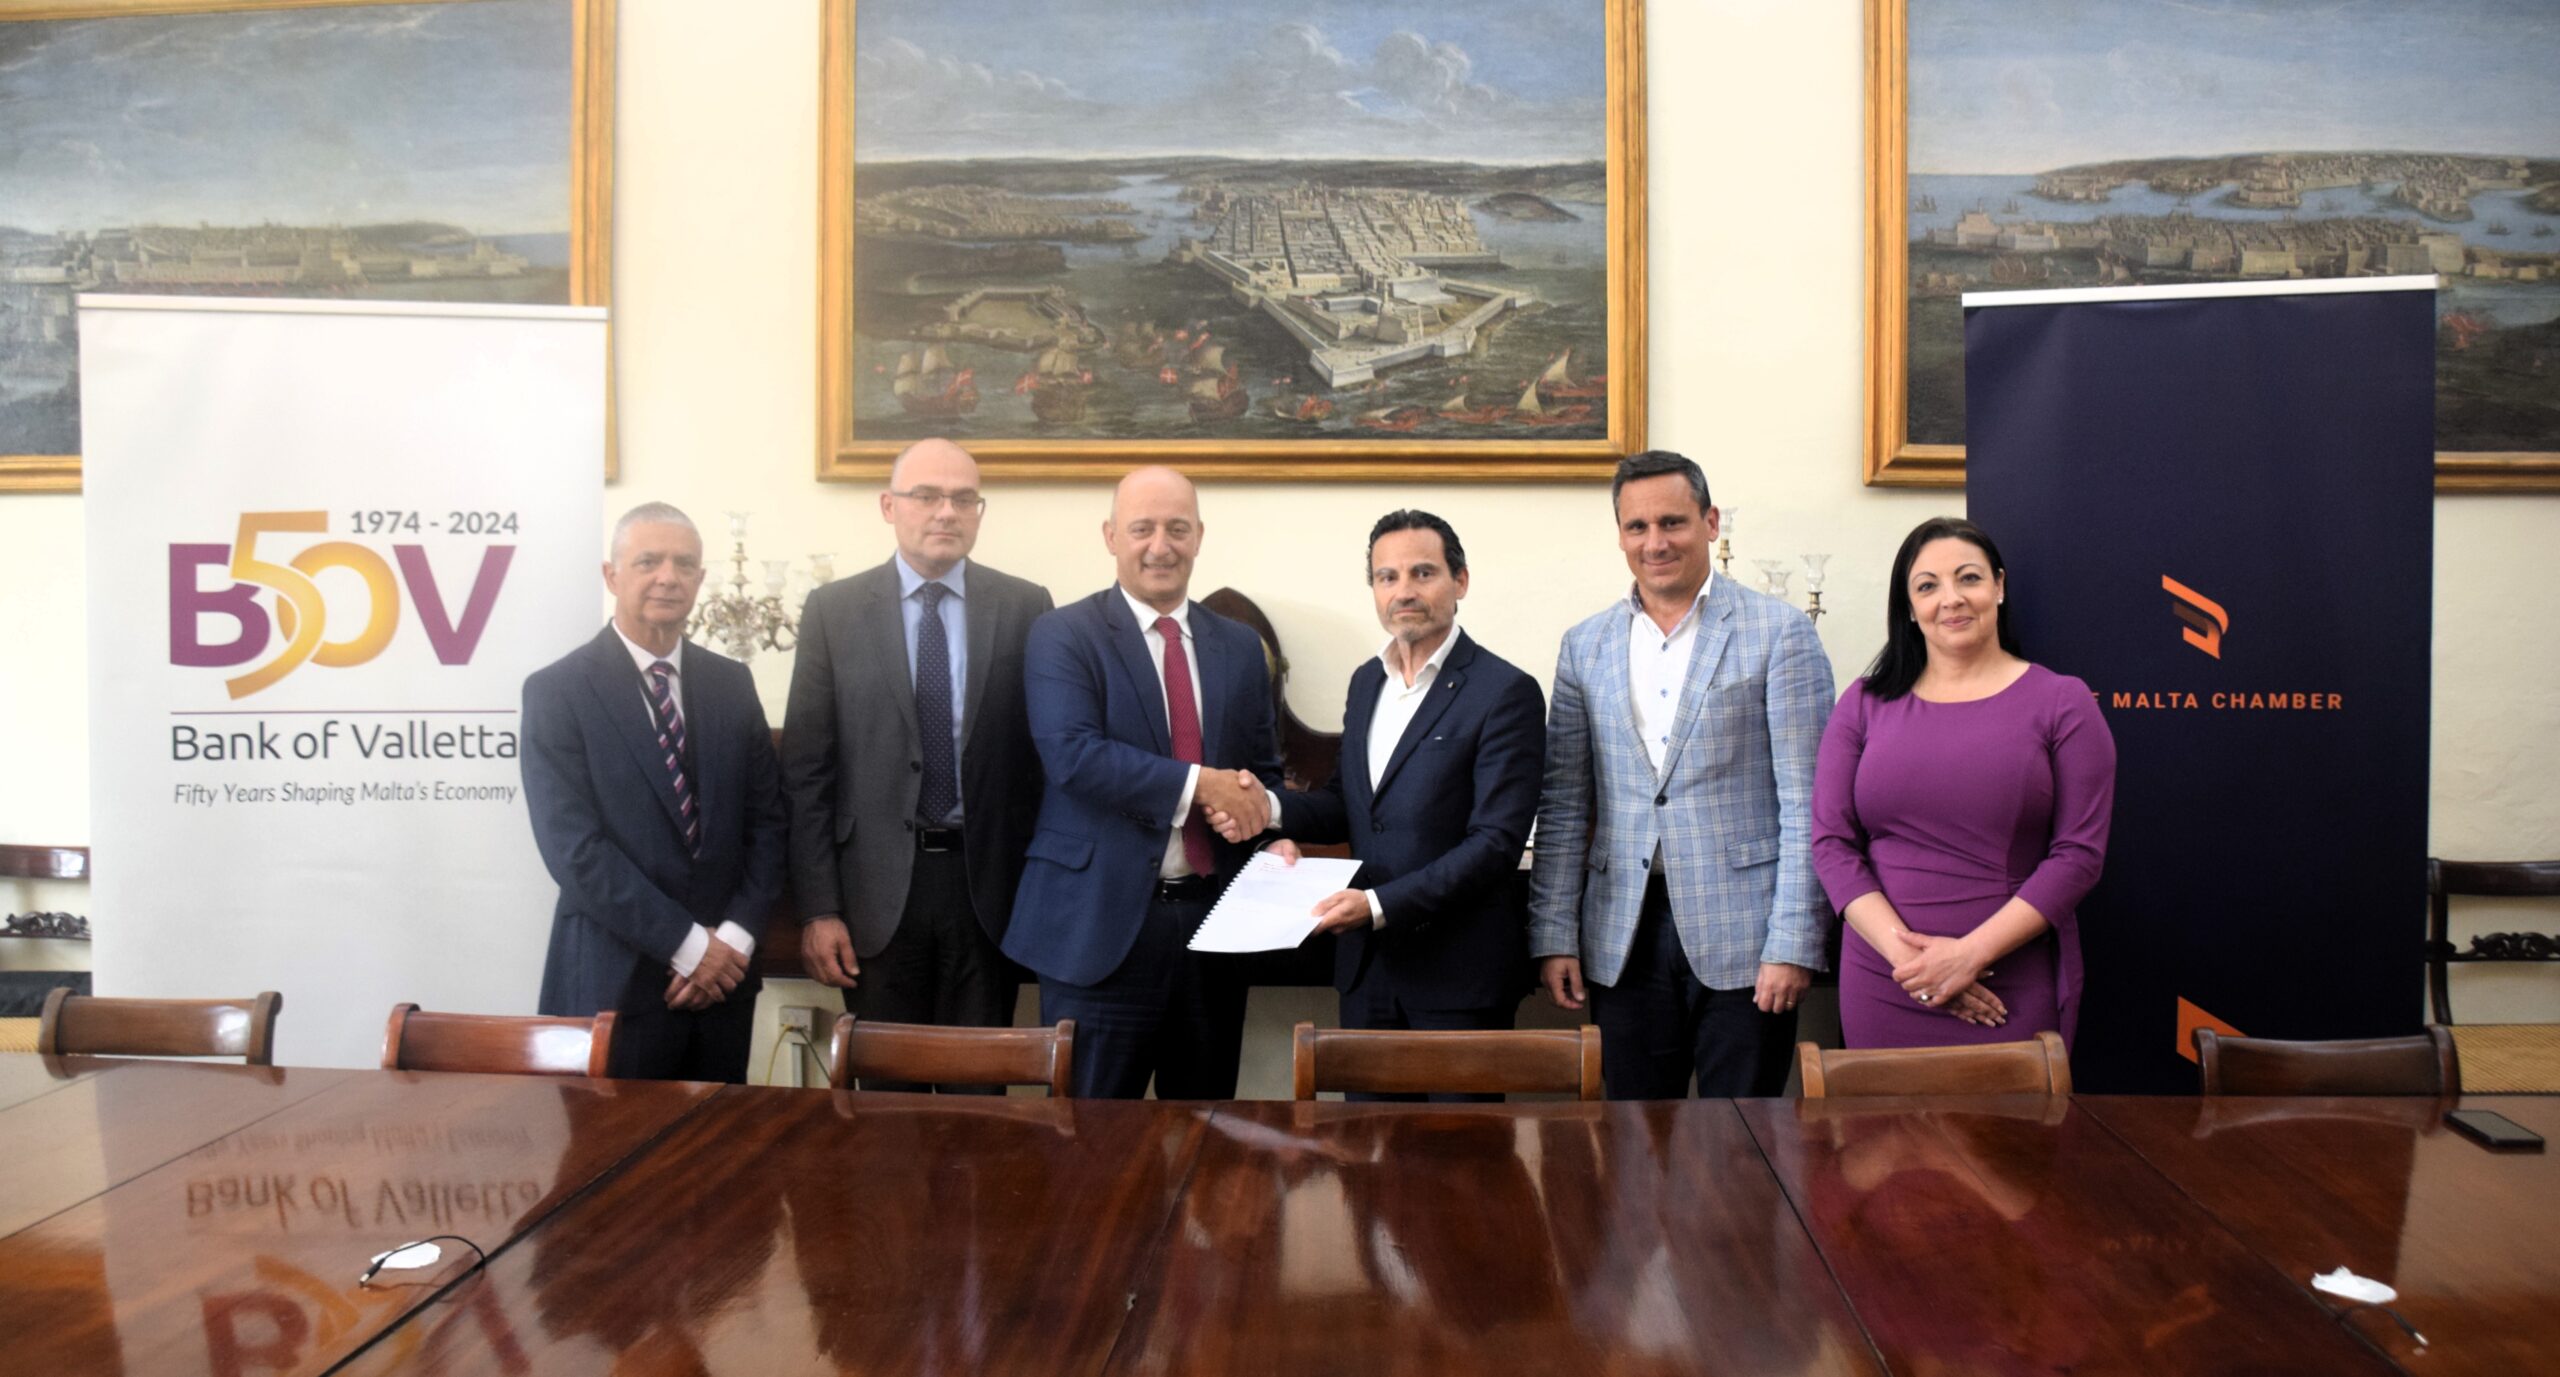 The Malta Chamber renews gold partnership with Bank of Valletta